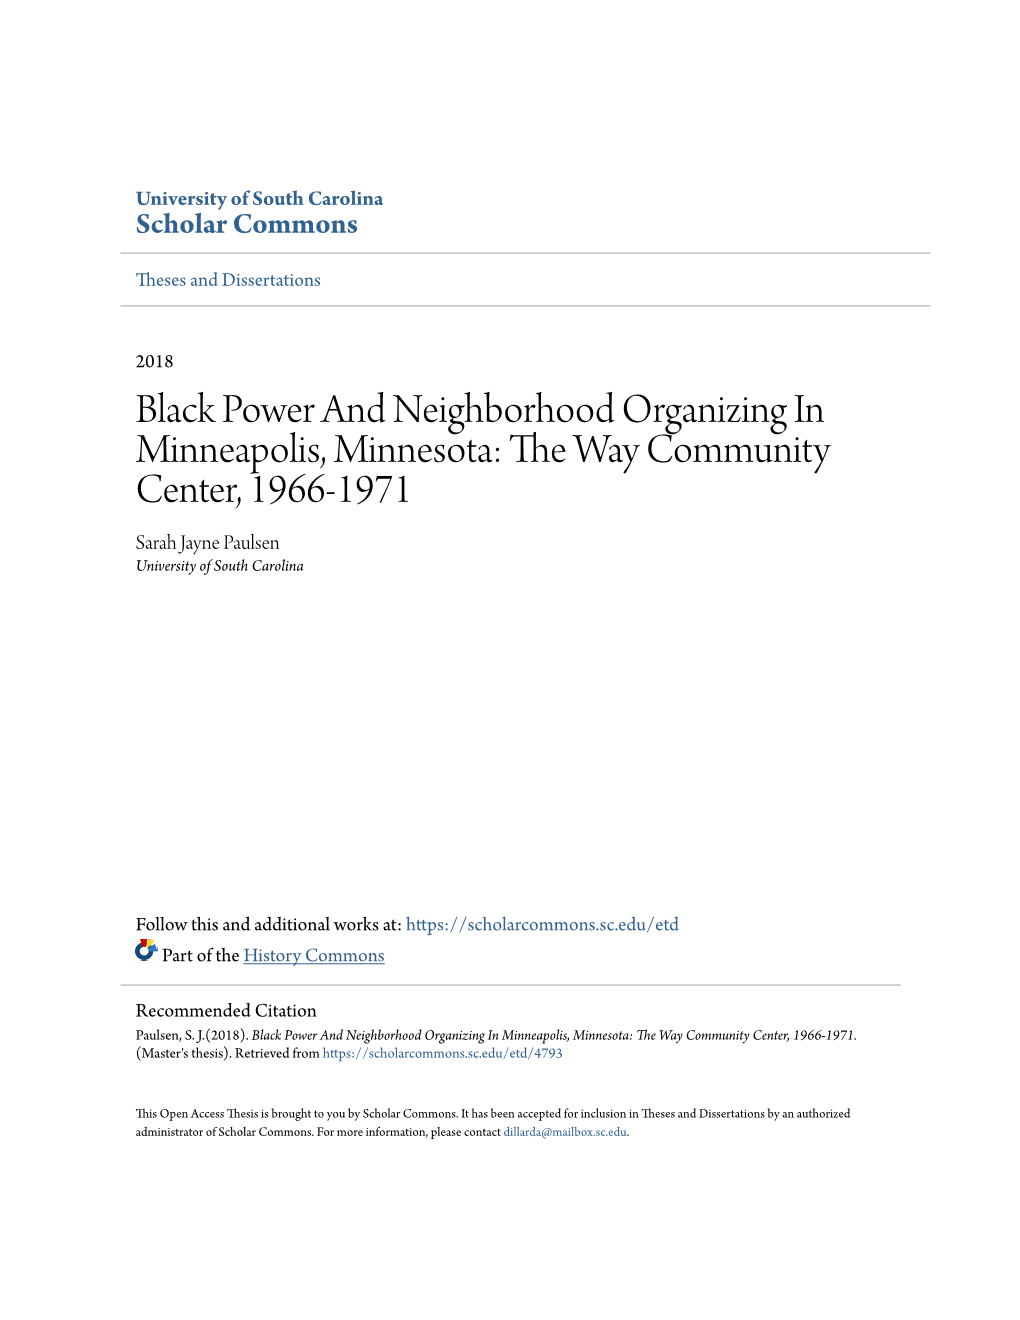 Black Power and Neighborhood Organizing in Minneapolis, Minnesota: the Aw Y Community Center, 1966-1971 Sarah Jayne Paulsen University of South Carolina